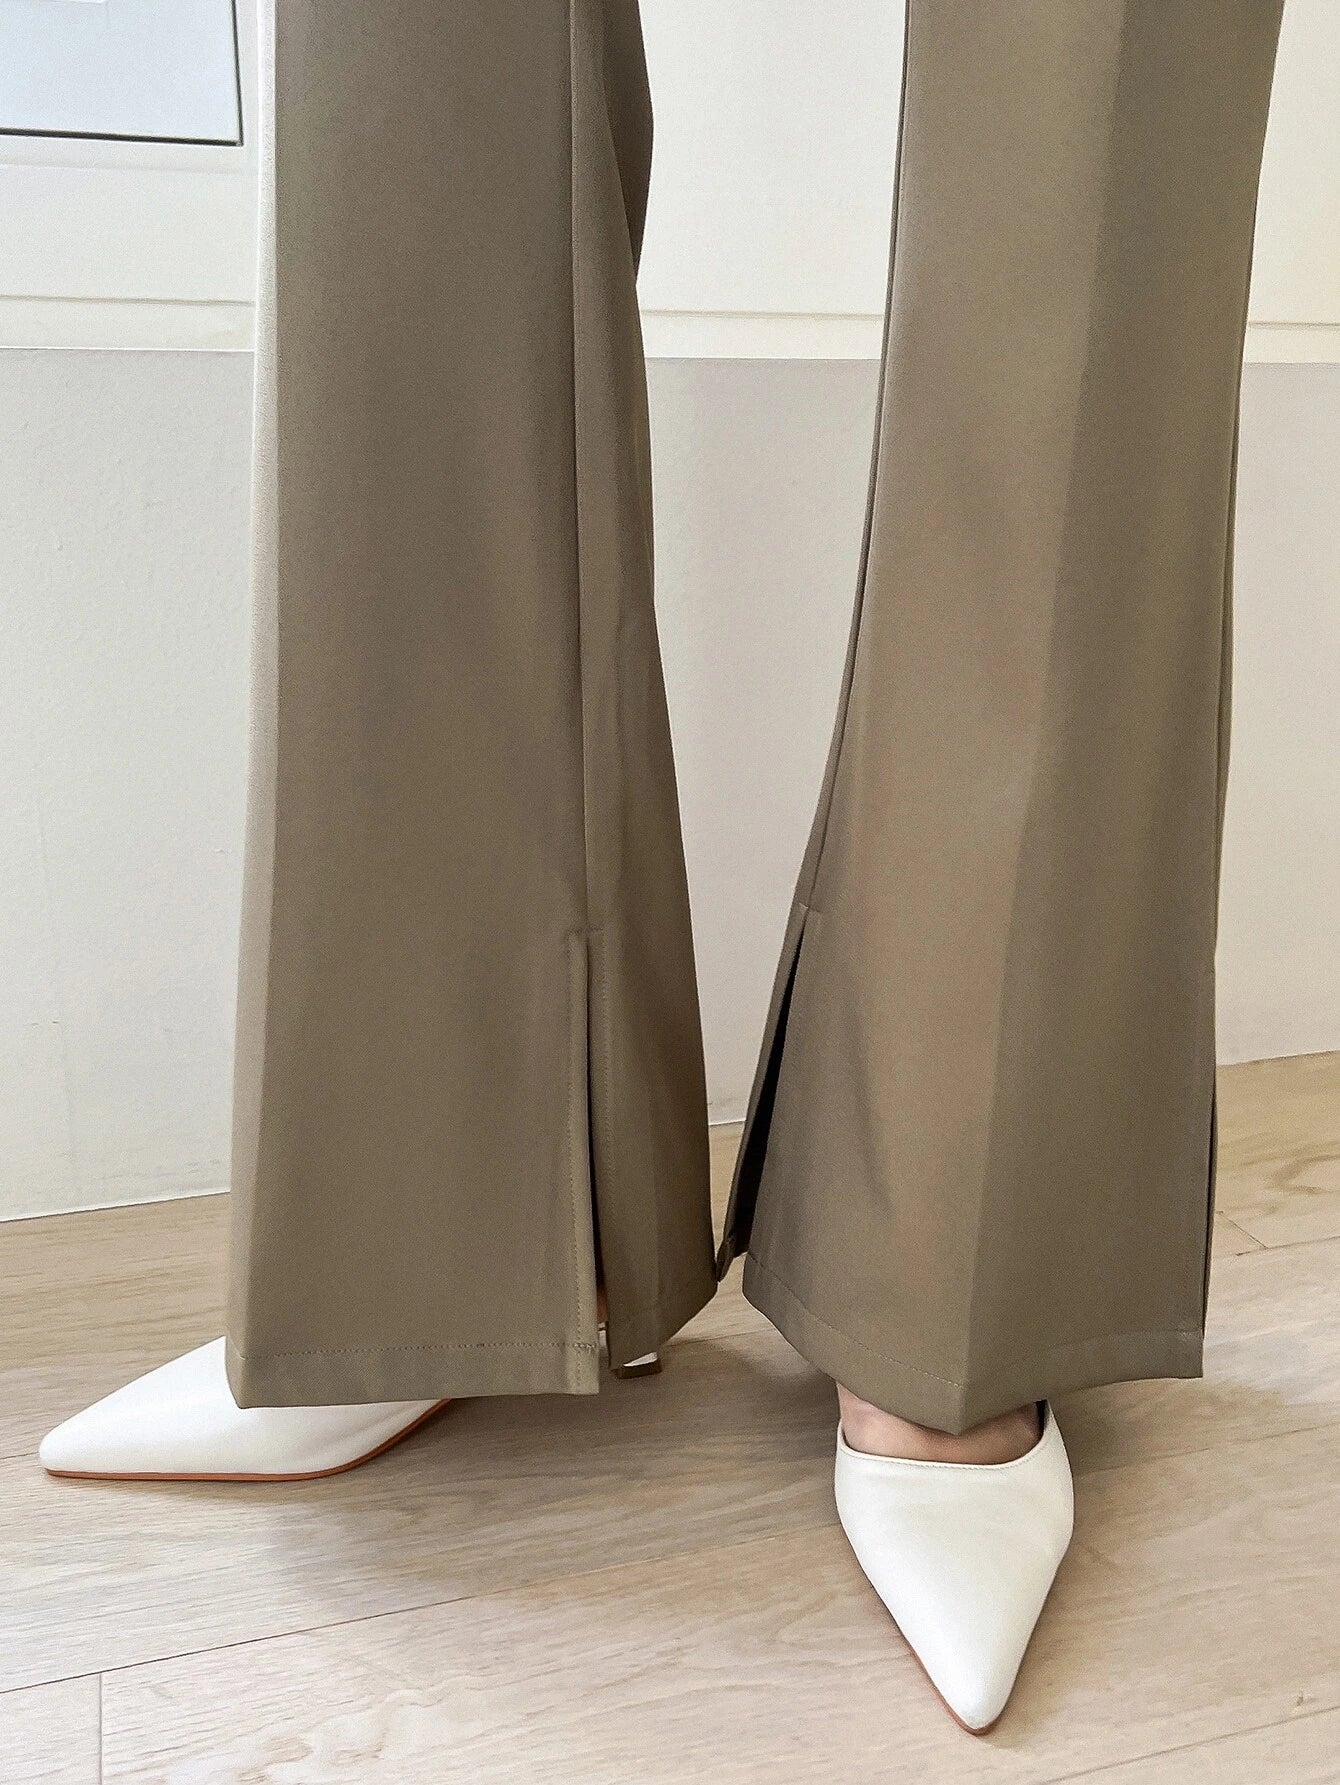 Buy Shein Dazy Slant Pocket Zip Fly Suit Pants in Pakistan